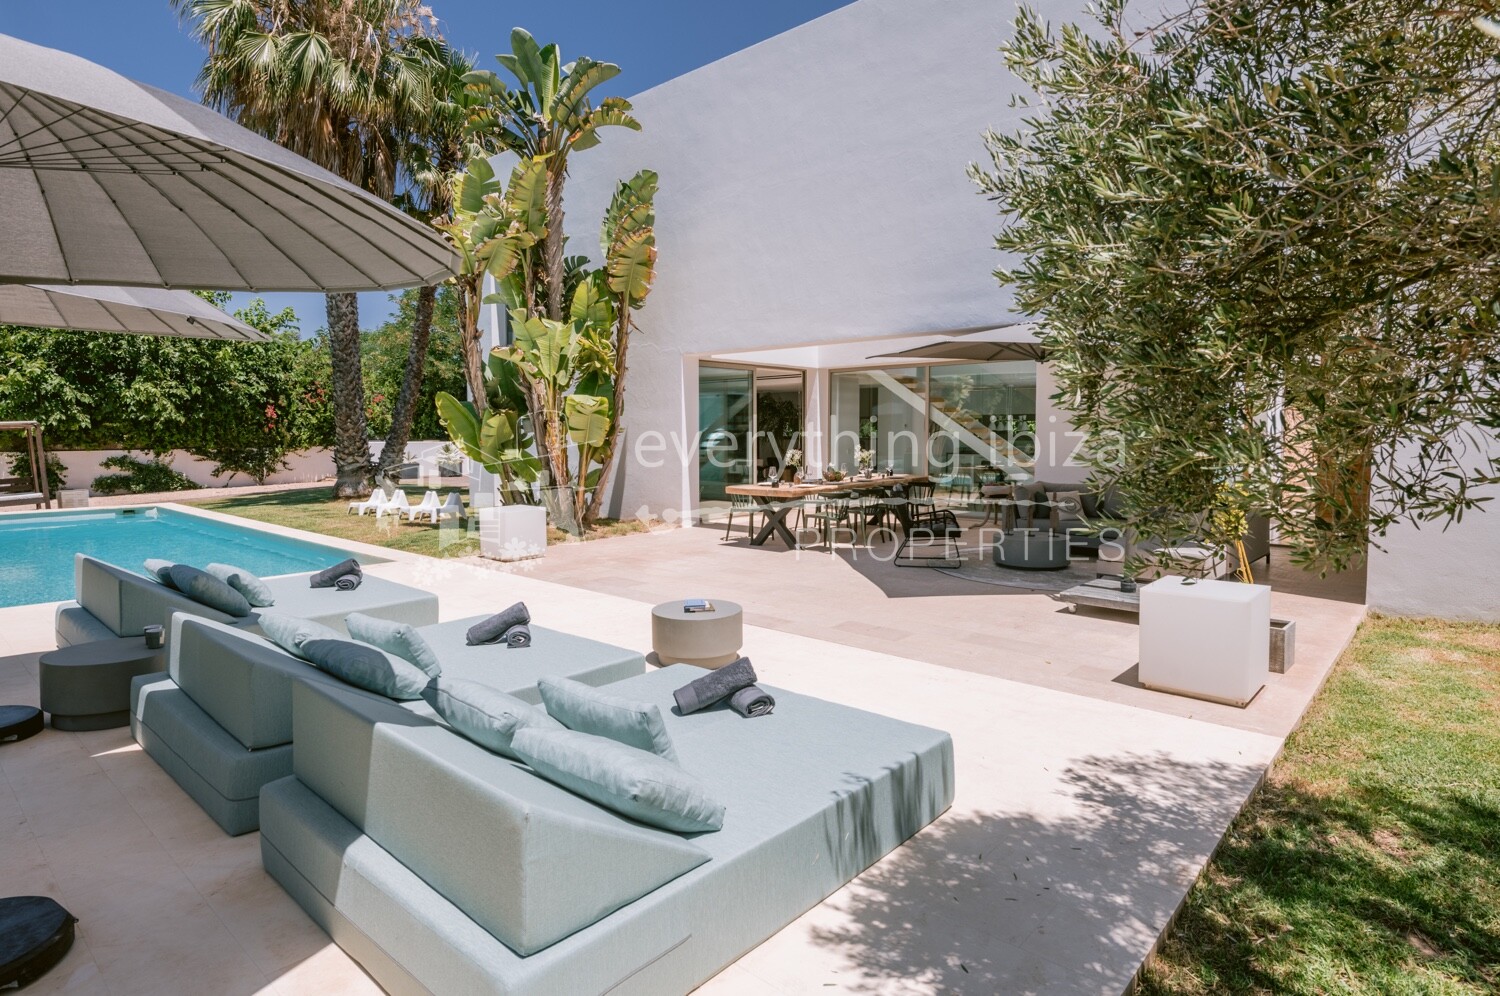 Cosmopolitan Luxury Detached Villa Close to Jesus Village, ref. 1617, for sale in Ibiza by everything ibiza Properties